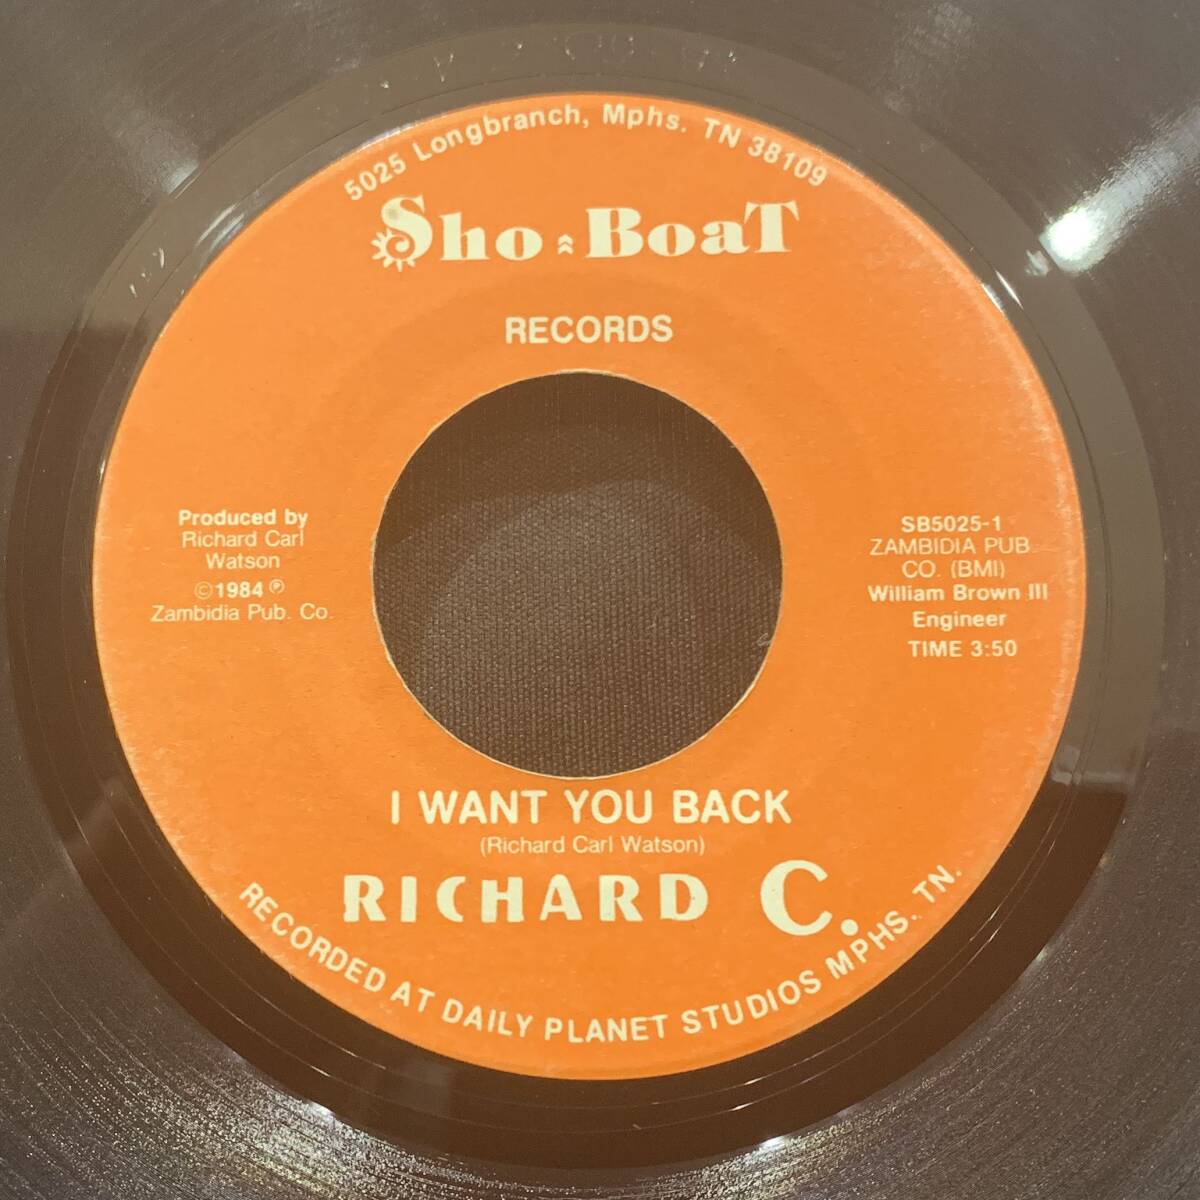 [EP]Richard C. - It\'s Hard To Make It / I Want You Back 1984 year US original Sho Boat SB5025